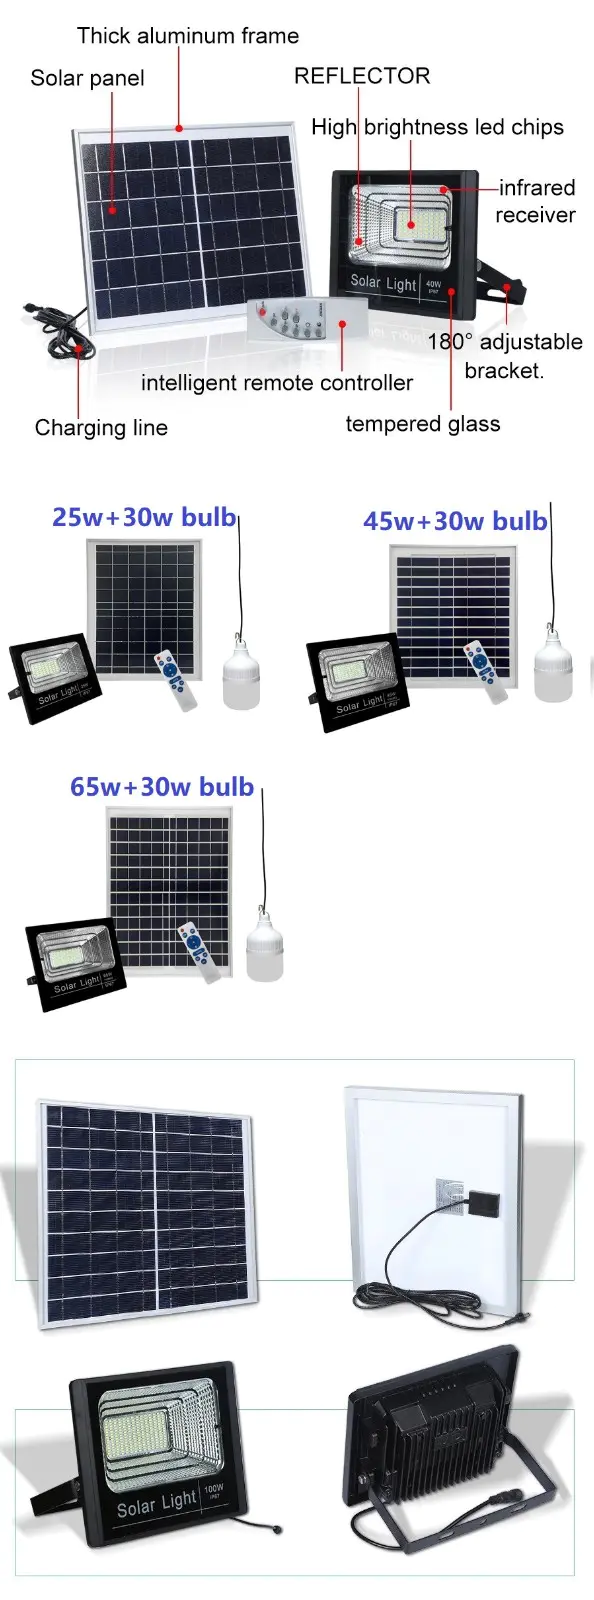 Litel Technology reasonable price solar powered flood lights outdoor hot-sale for barn